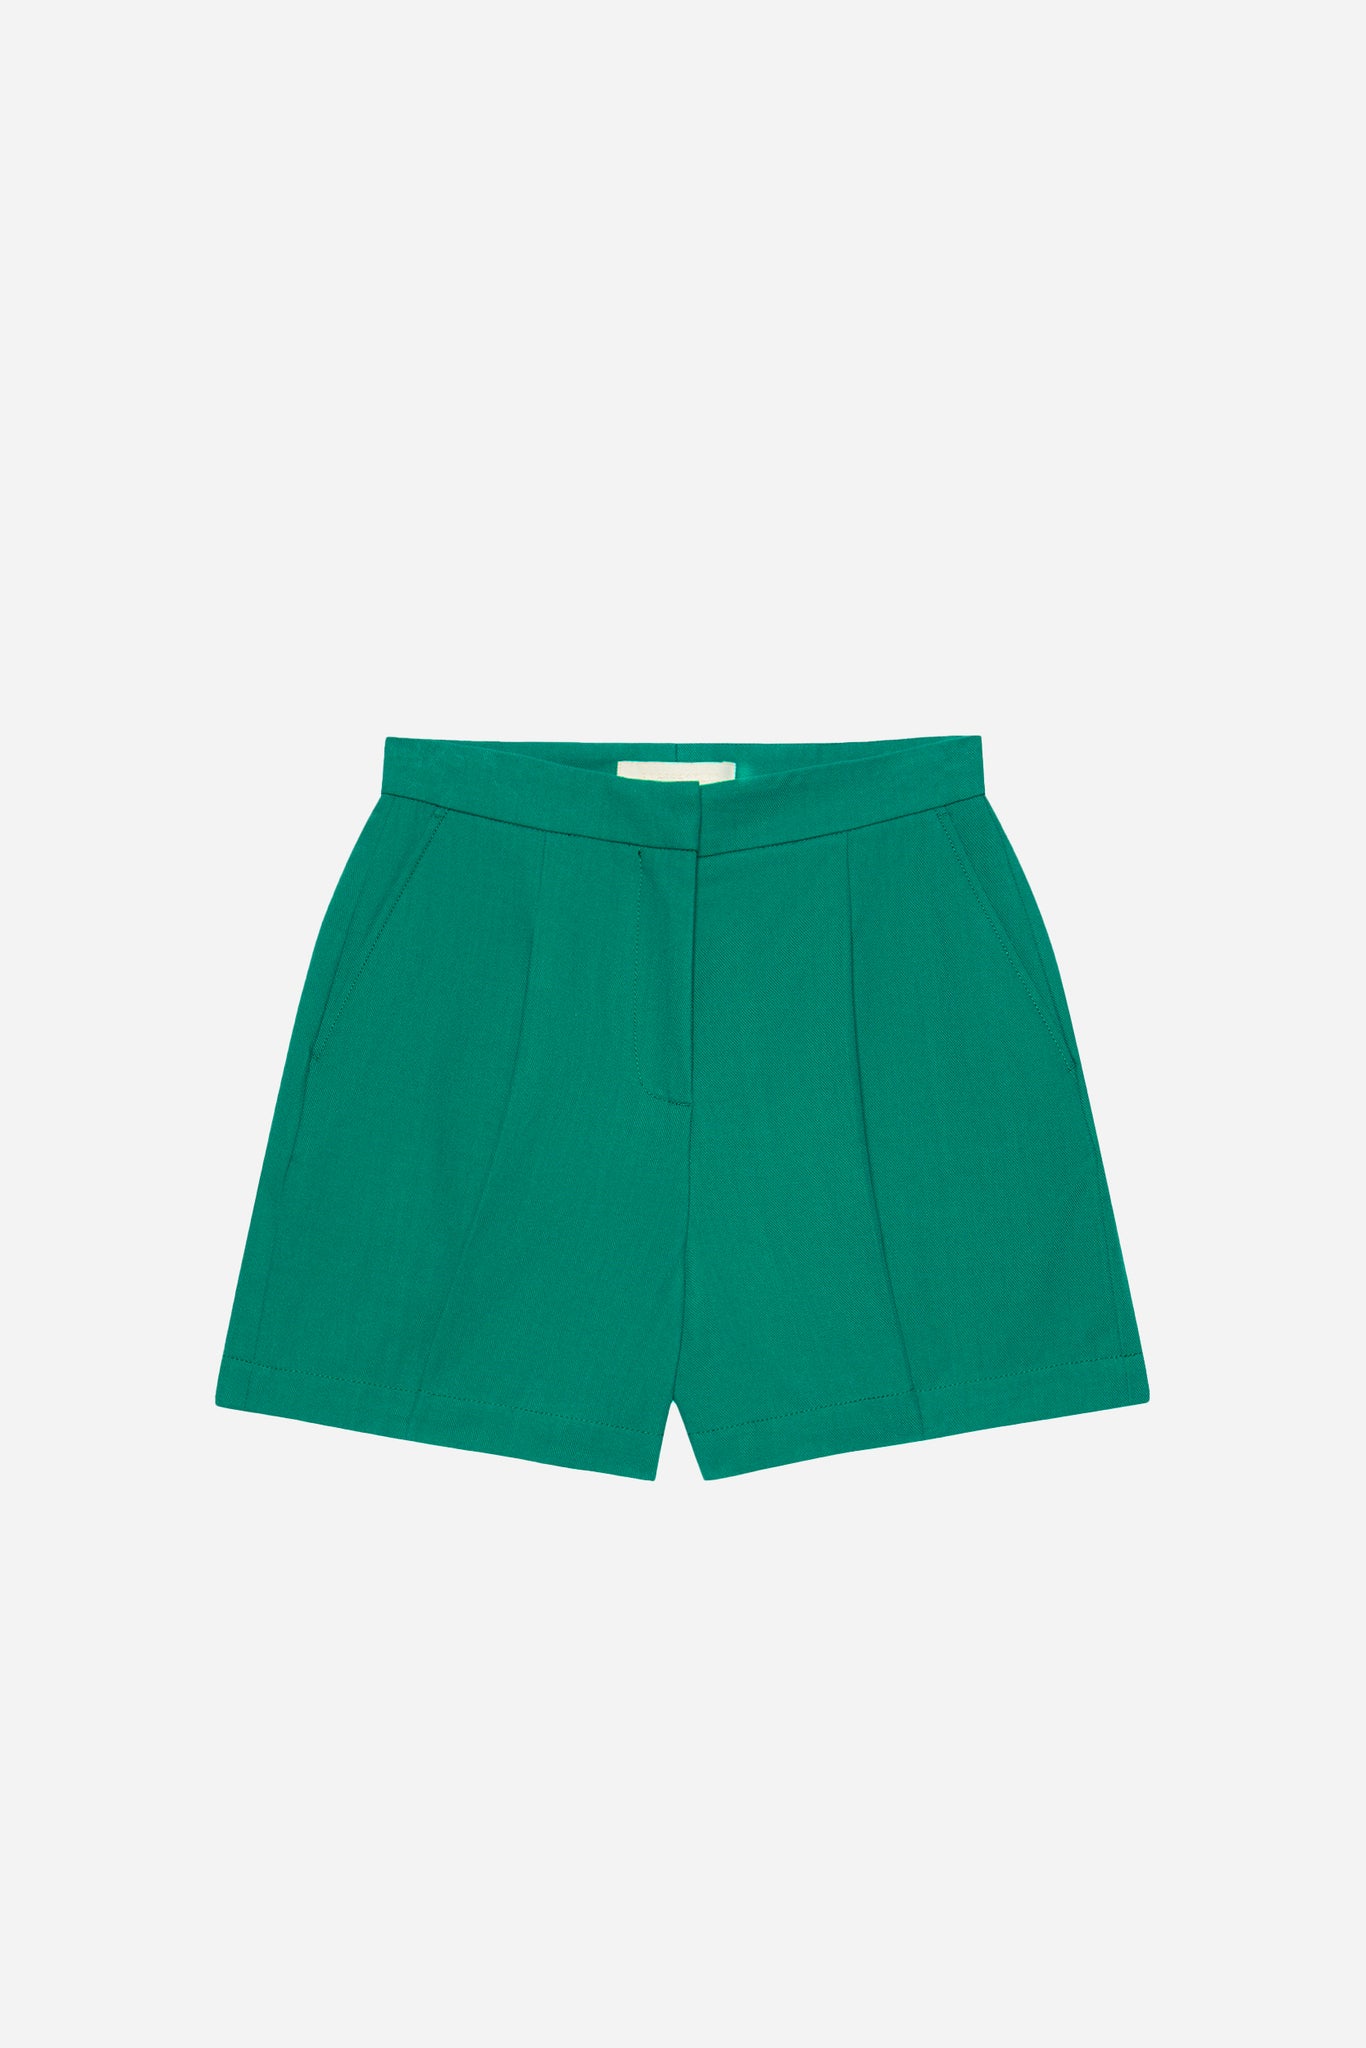 Valentina shorts, green